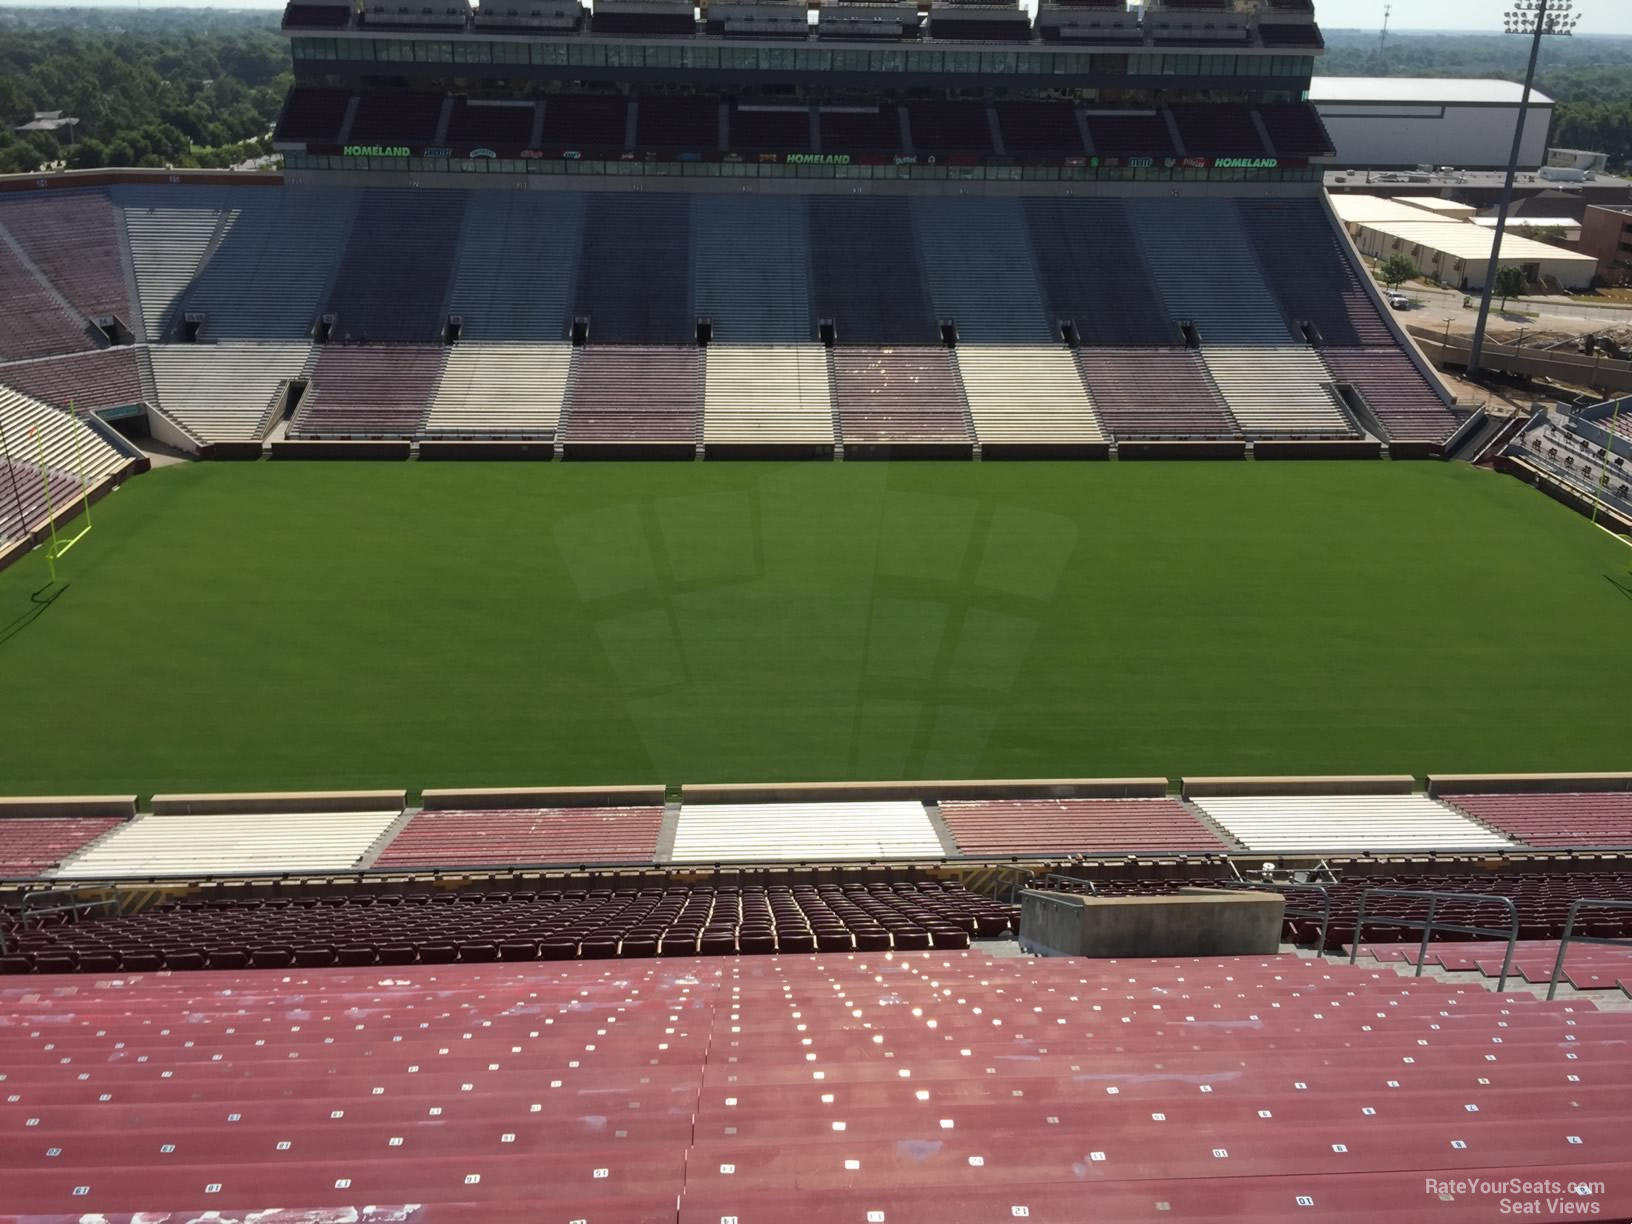 section 106, row 35 seat view  - oklahoma memorial stadium